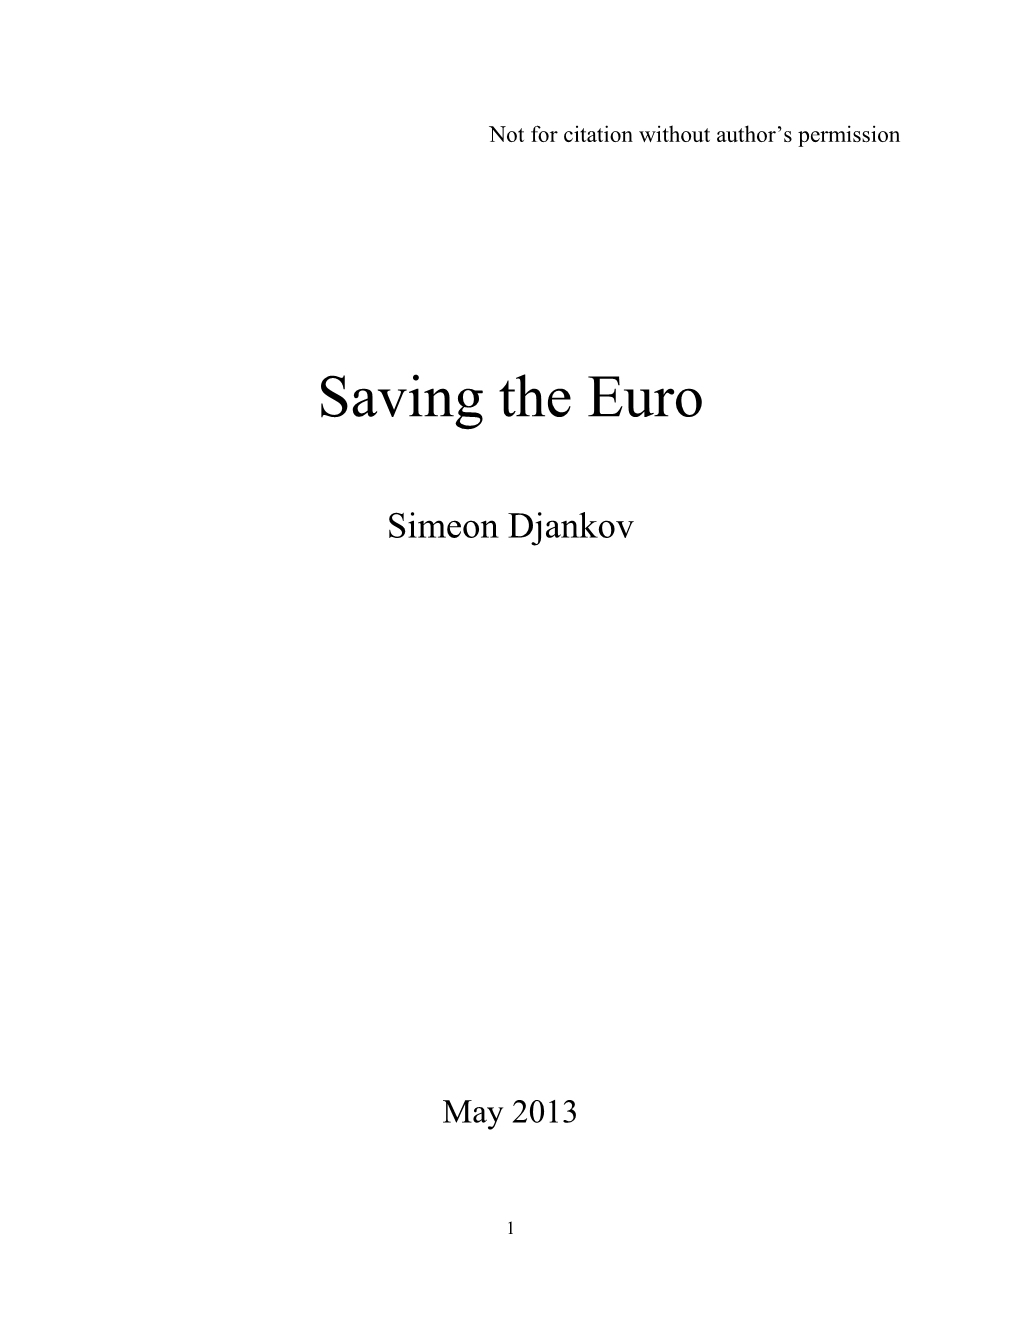 Saving the Euro